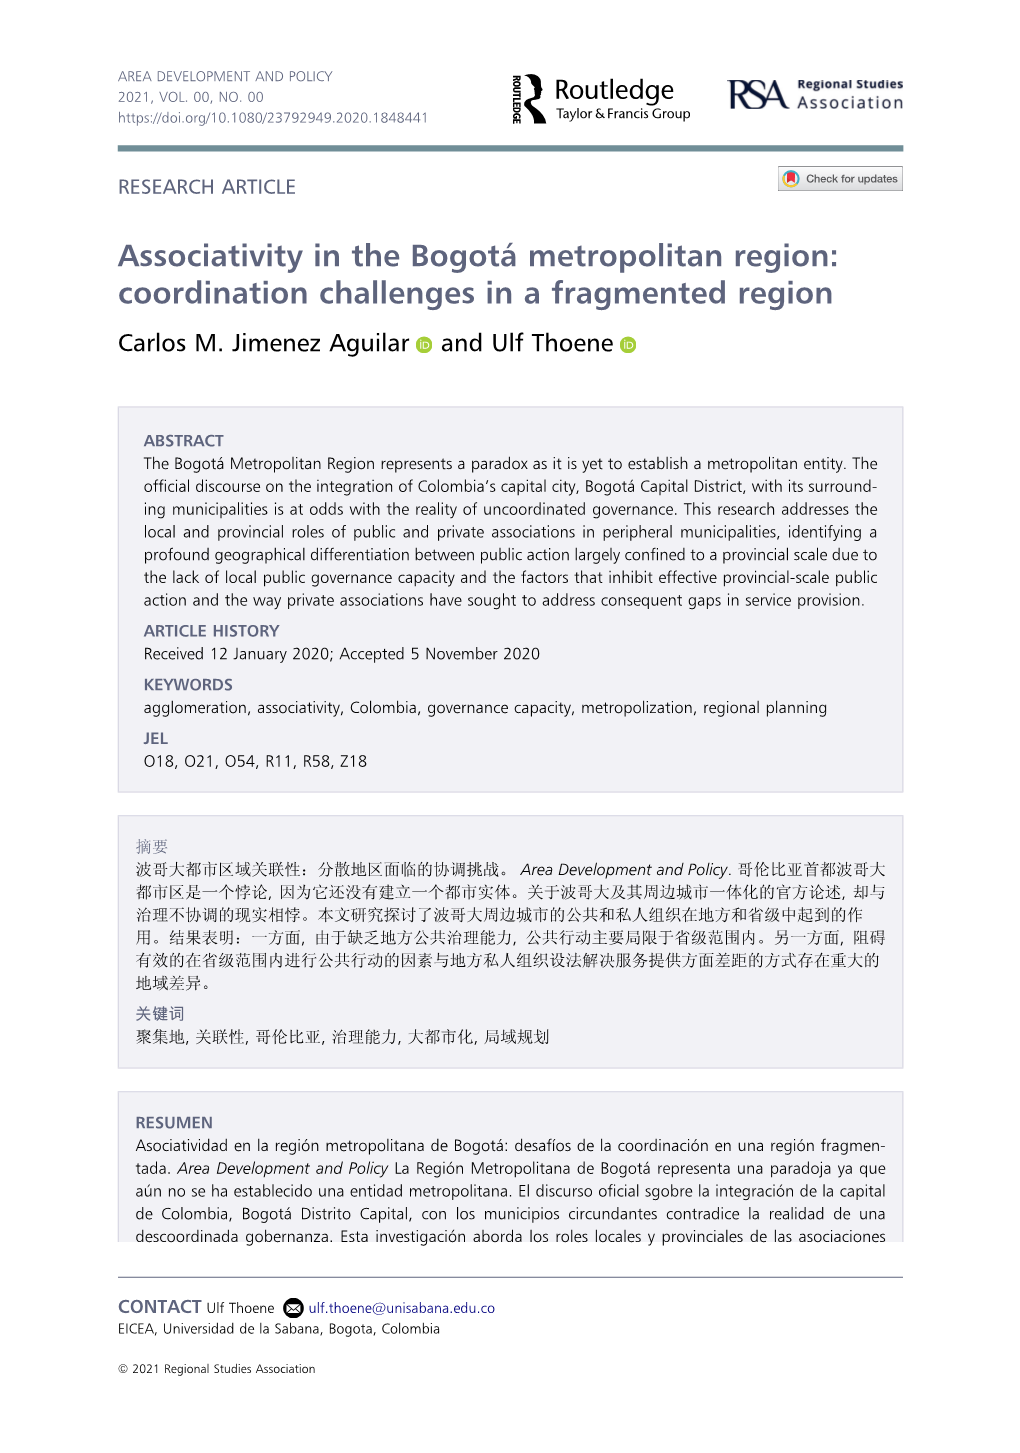 Associativity in the Bogotá Metropolitan Region: Coordination Challenges in a Fragmented Region Carlos M